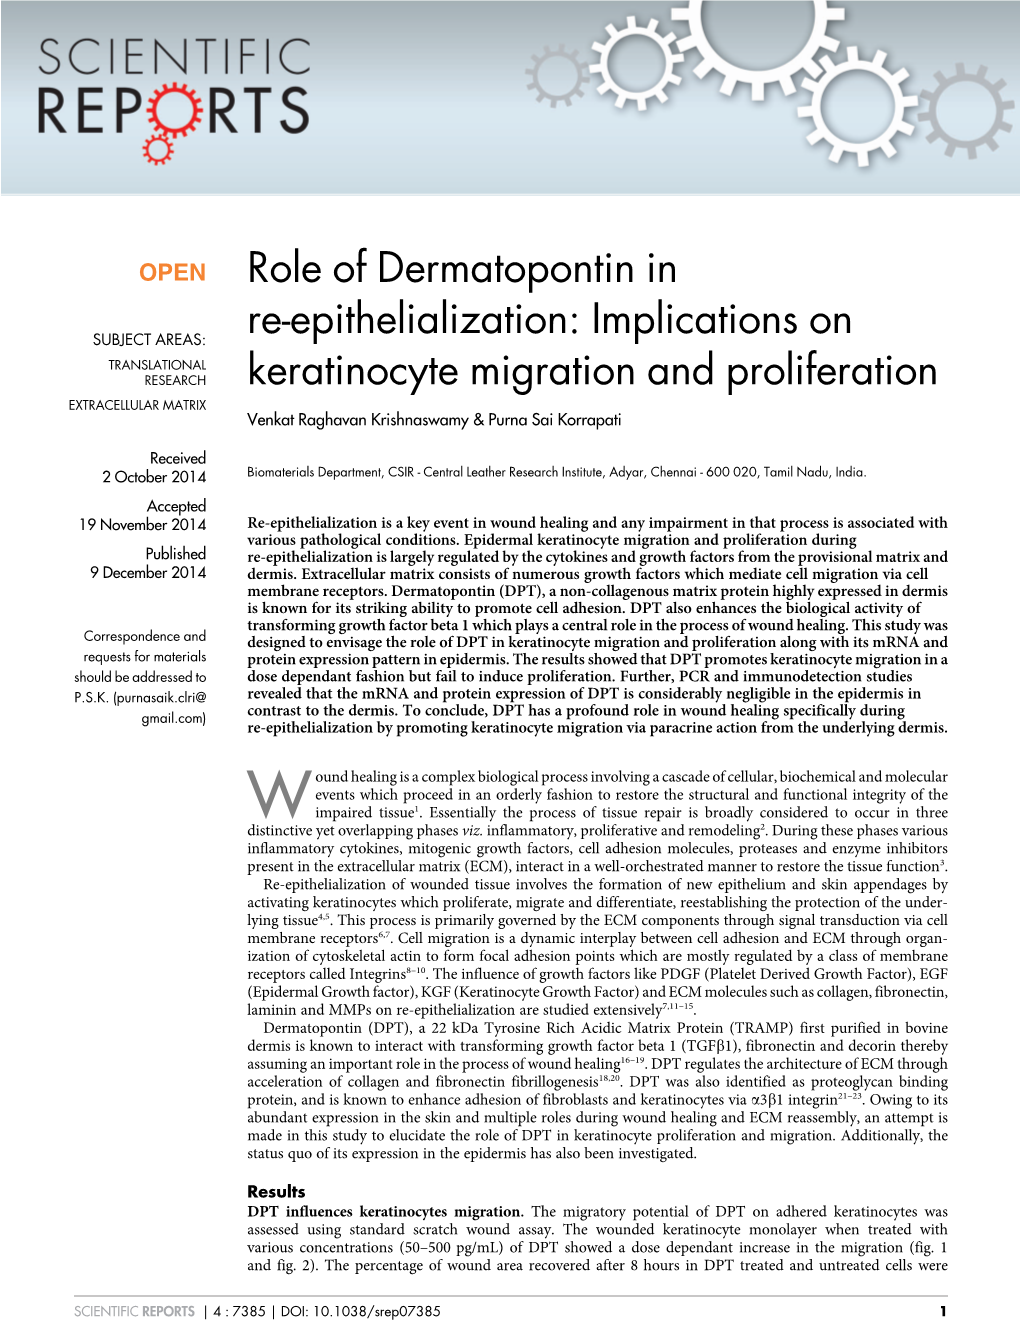 Implications on Keratinocyte Migration and Proliferation